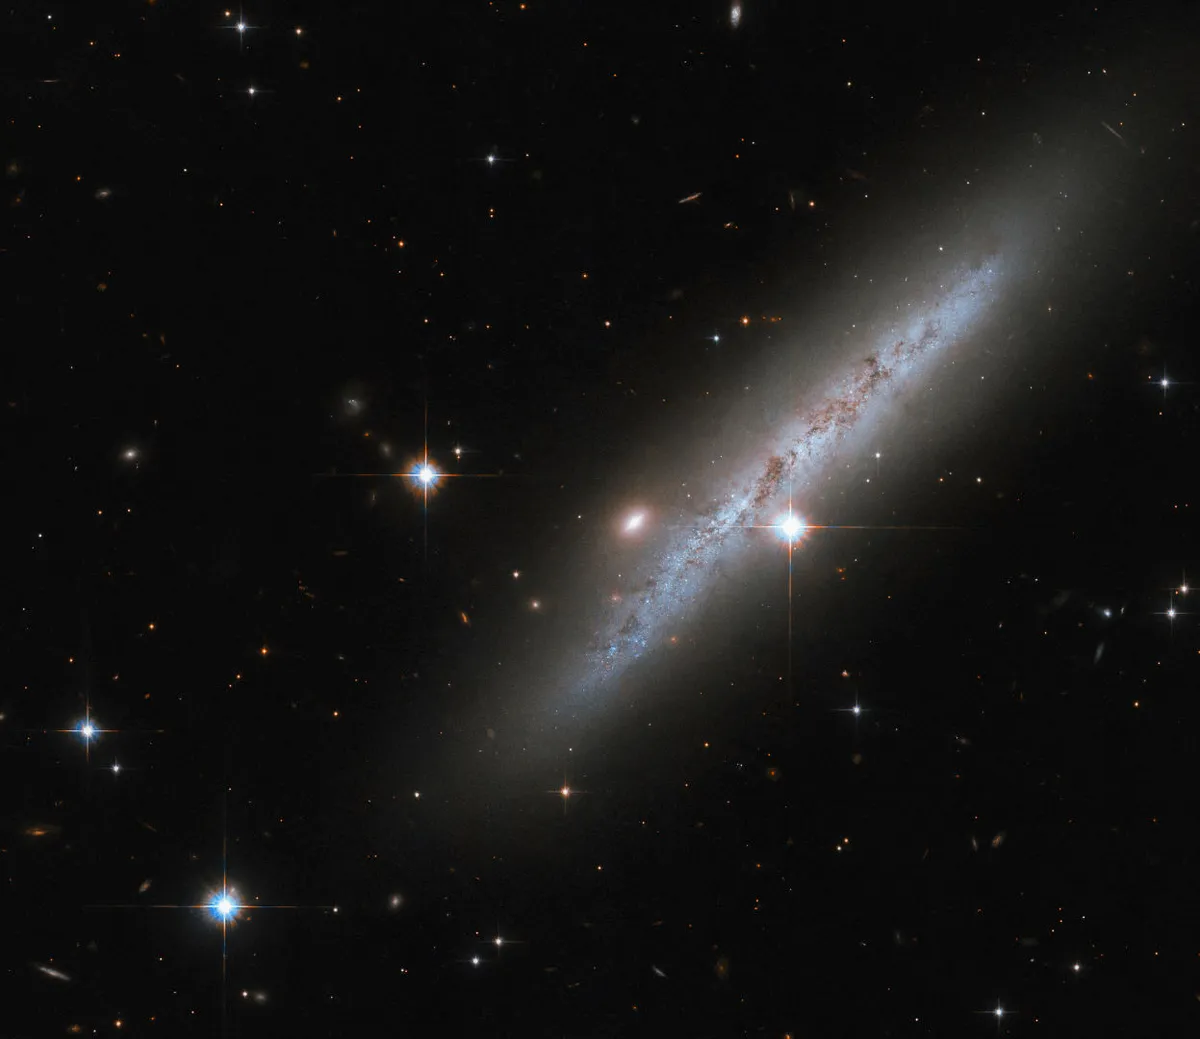 Galaxy UGC 2890 Hubble Space Telescope, 3 April 2023 Credit: SA/Hubble & NASA, C. Kilpatrick